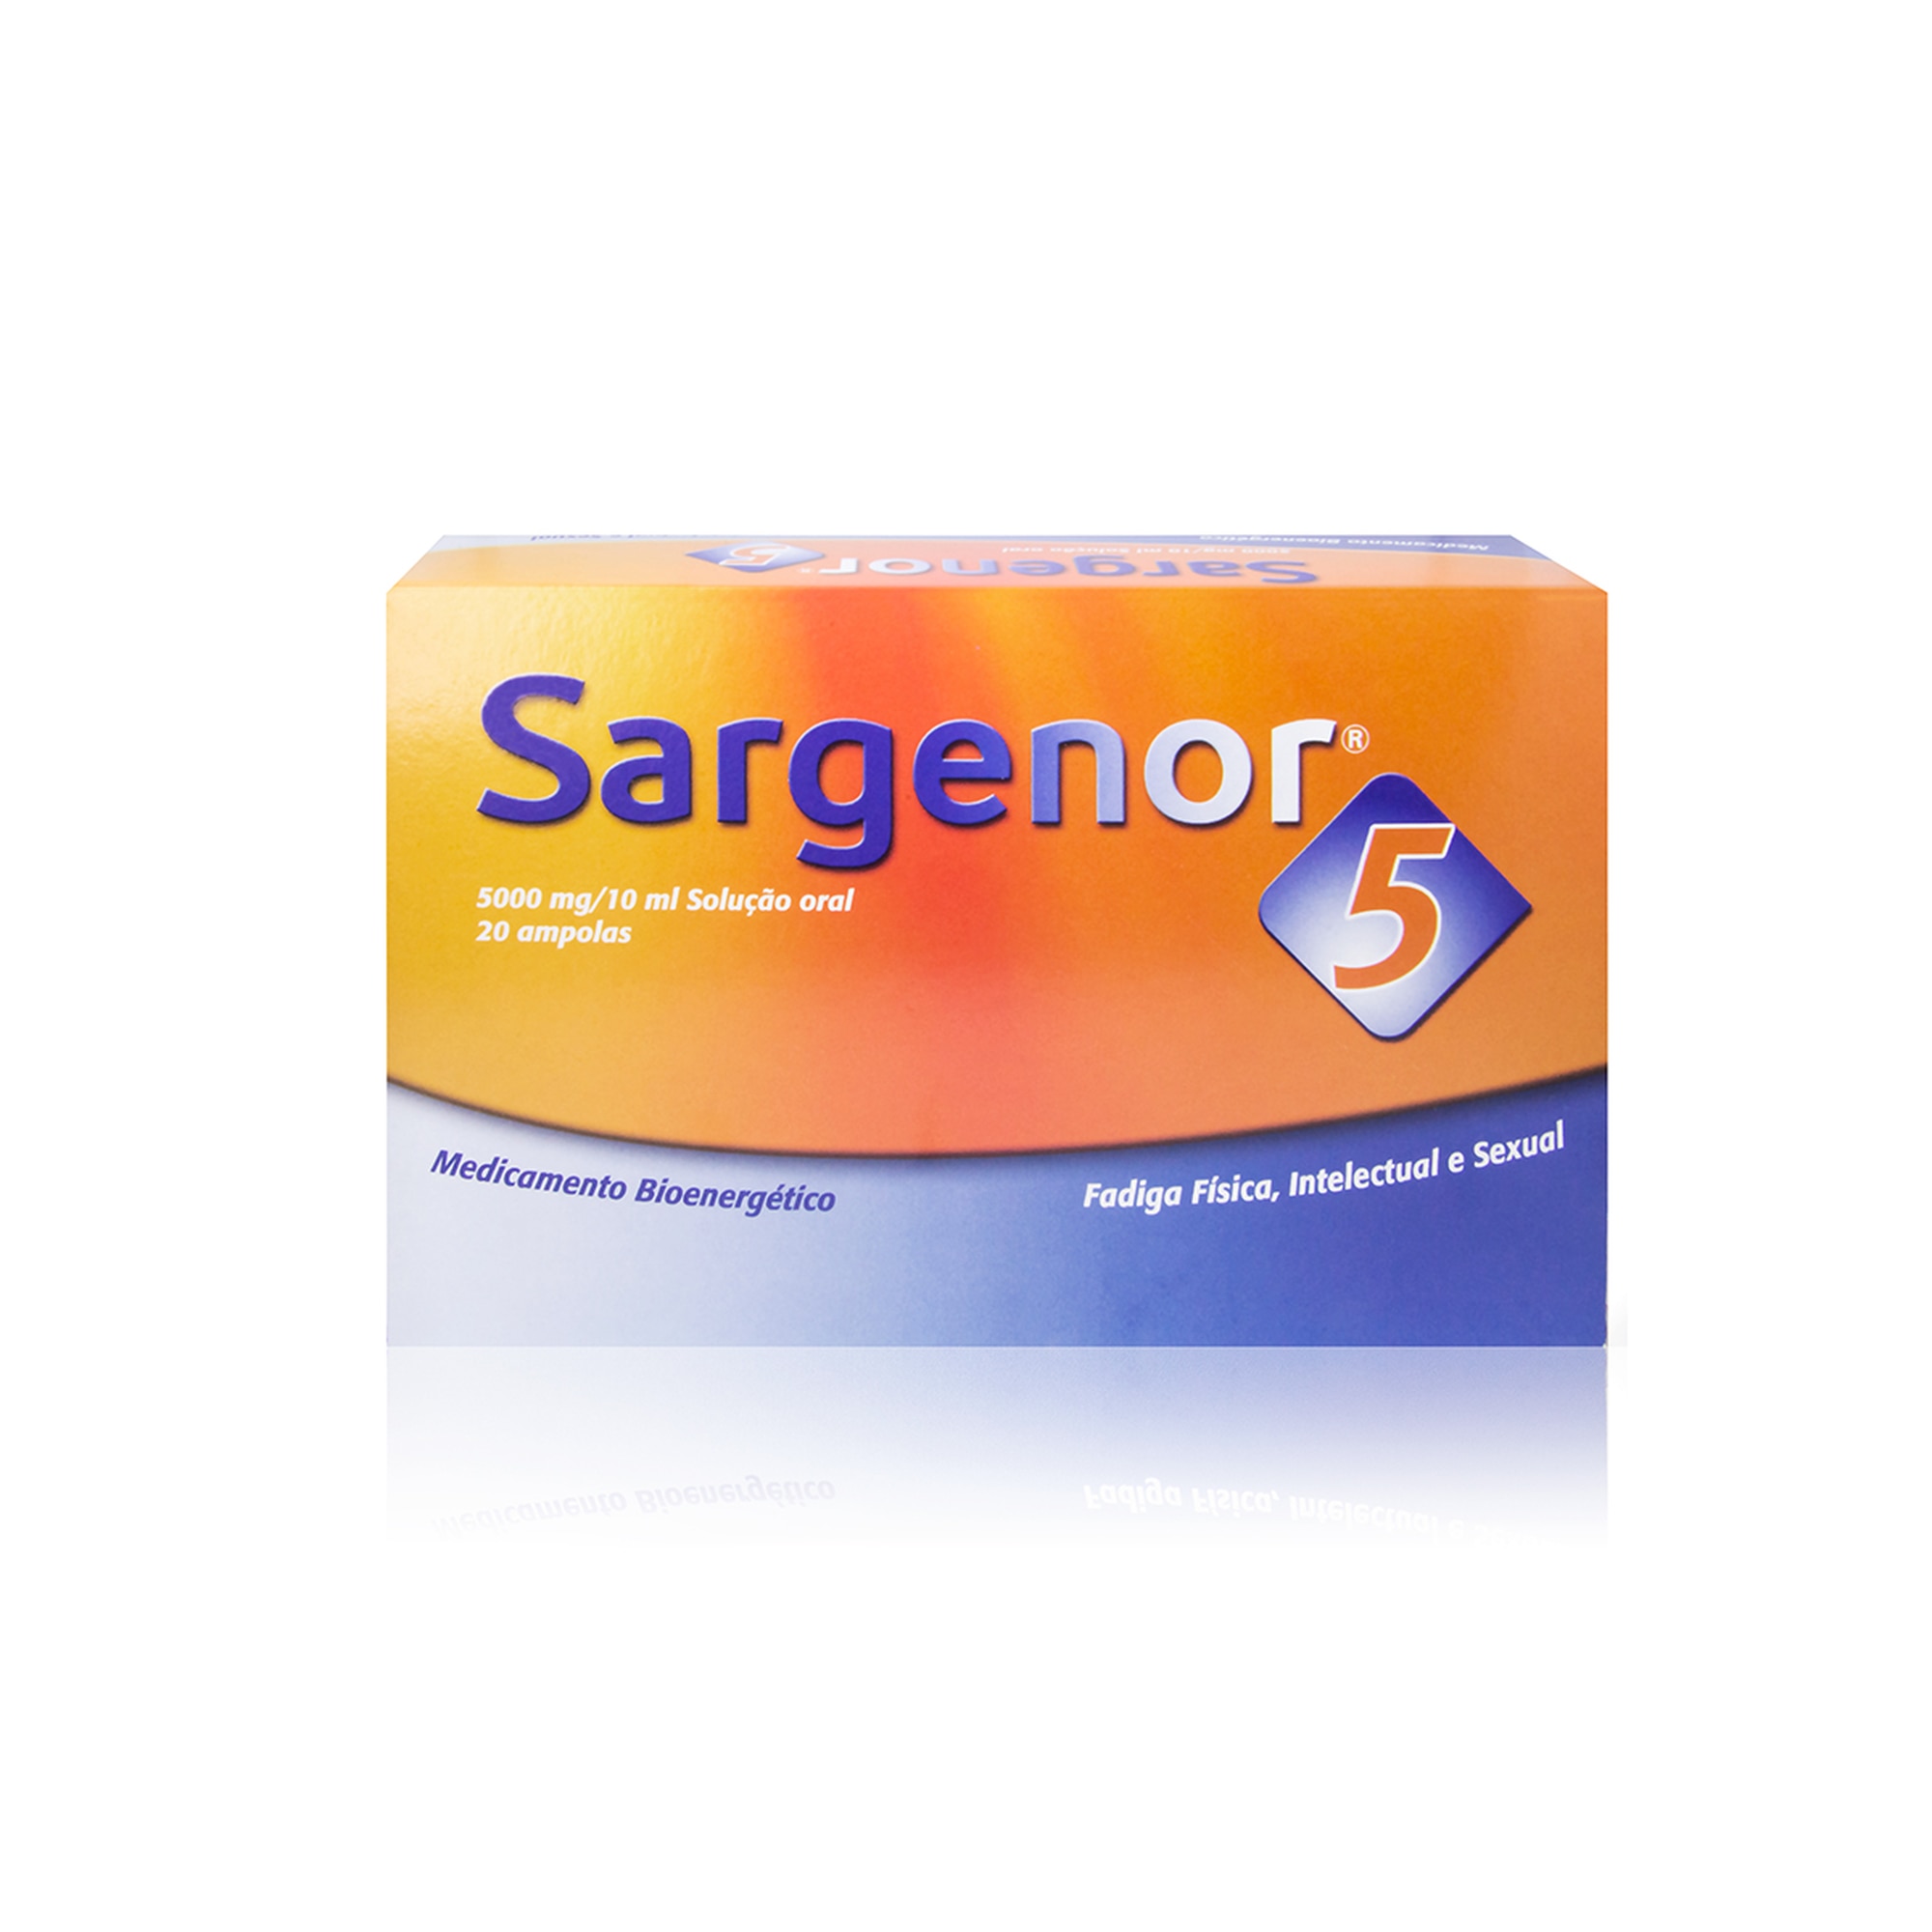 Sargenor 5 - изображение 0